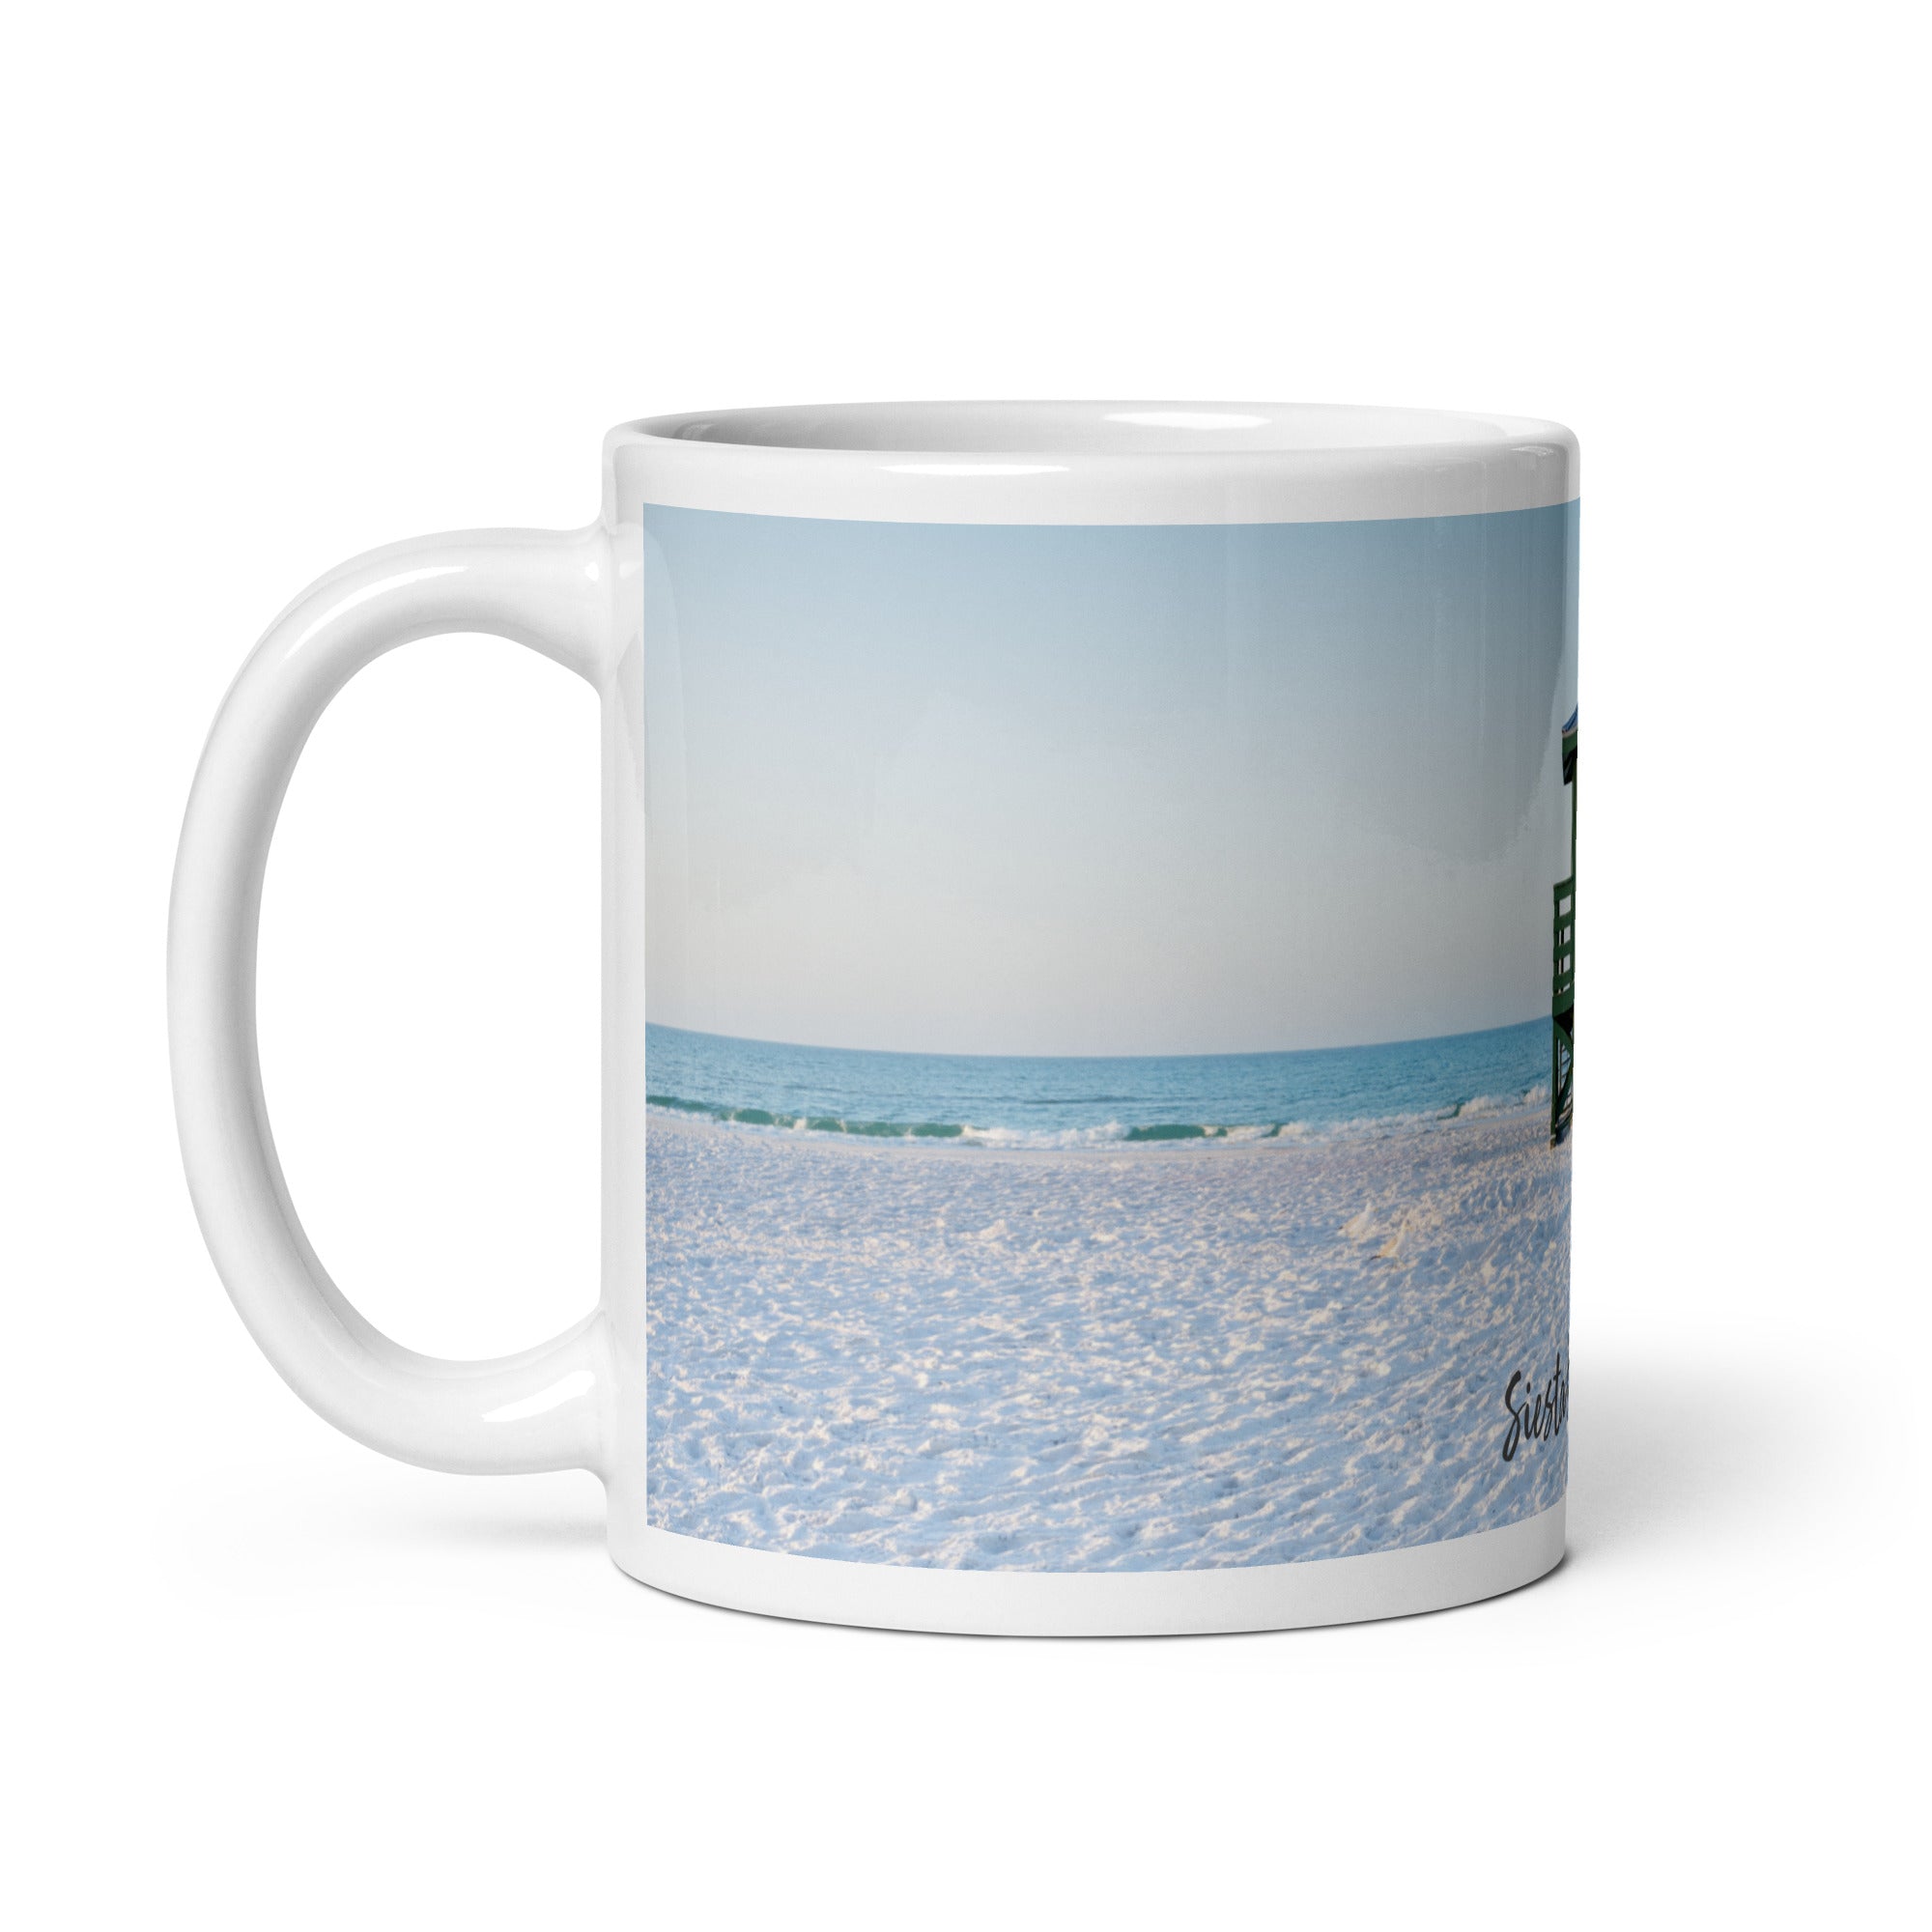 Green Lifeguard Stand Coffee Mug - Siesta Key Beach